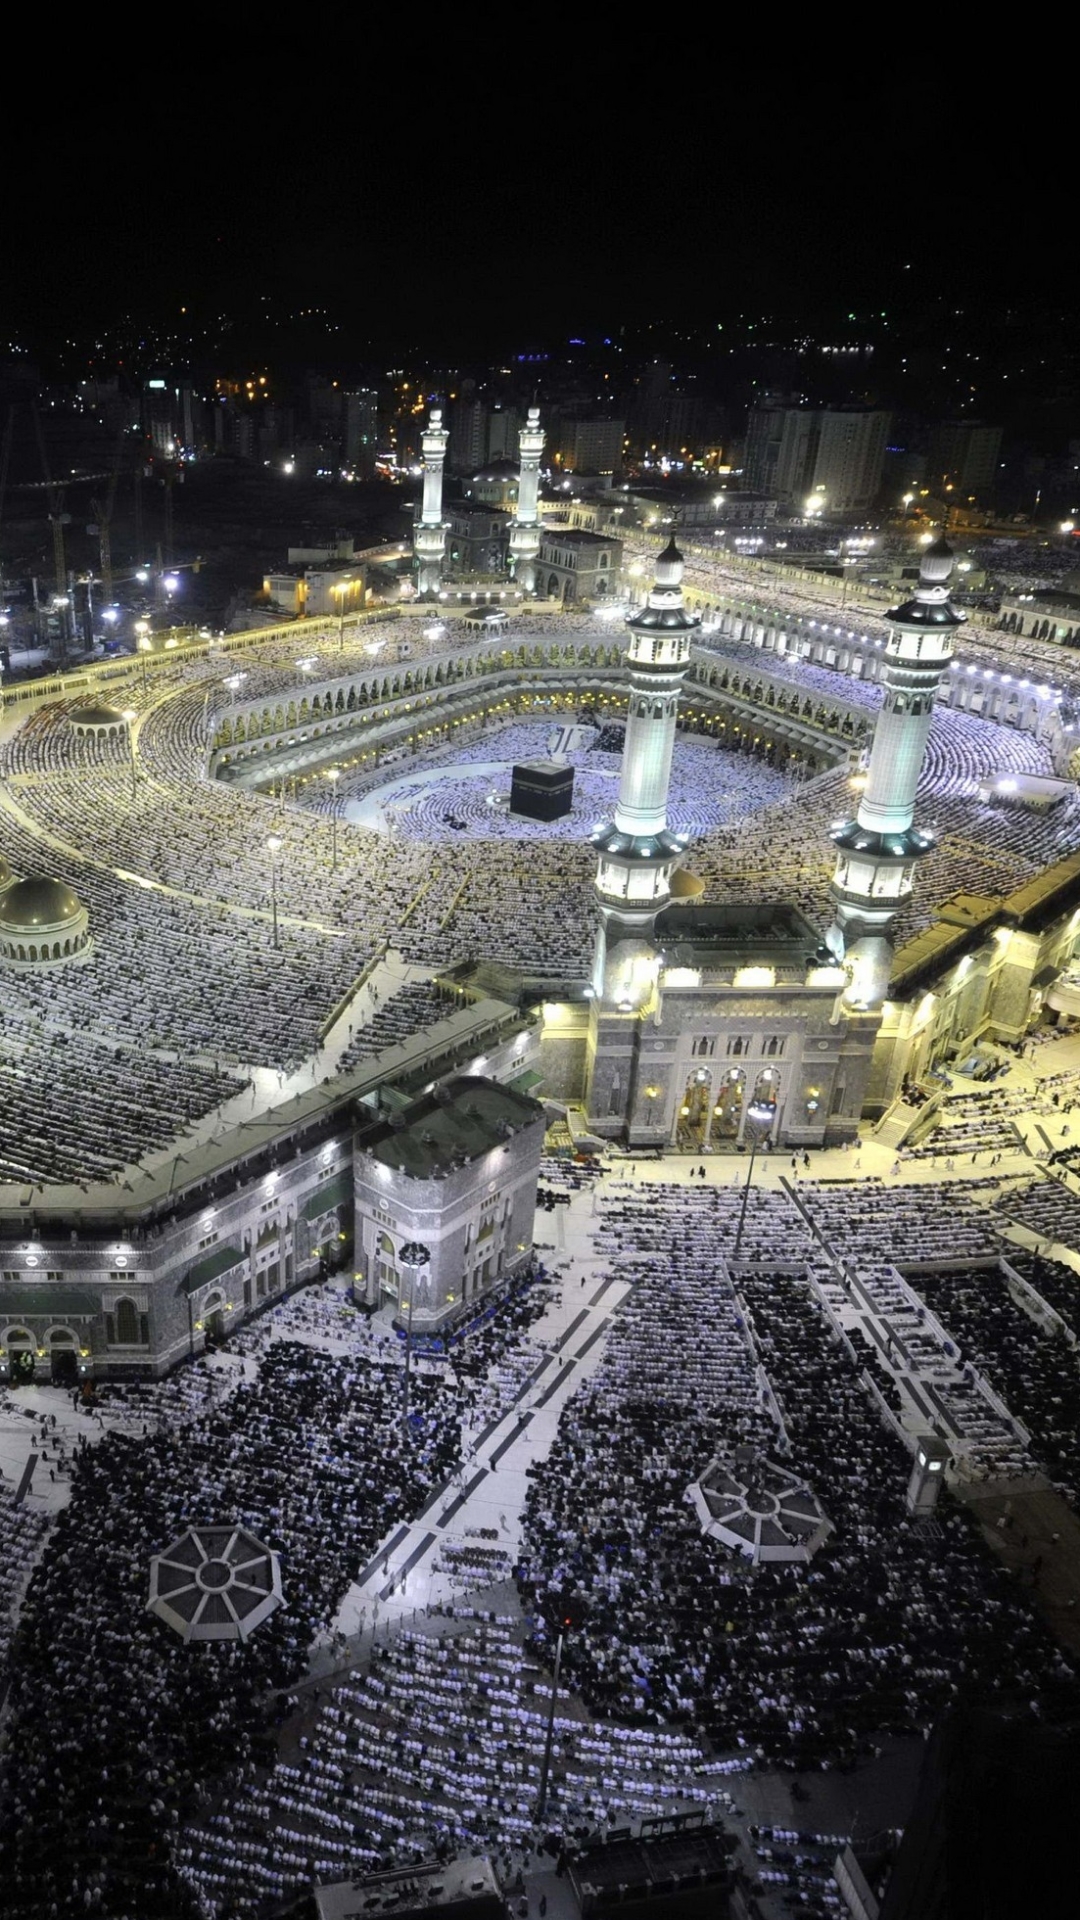 masjid al haram (mecca), kaaba, masjid al haram, mecca, arabia, religious, mosques cellphone